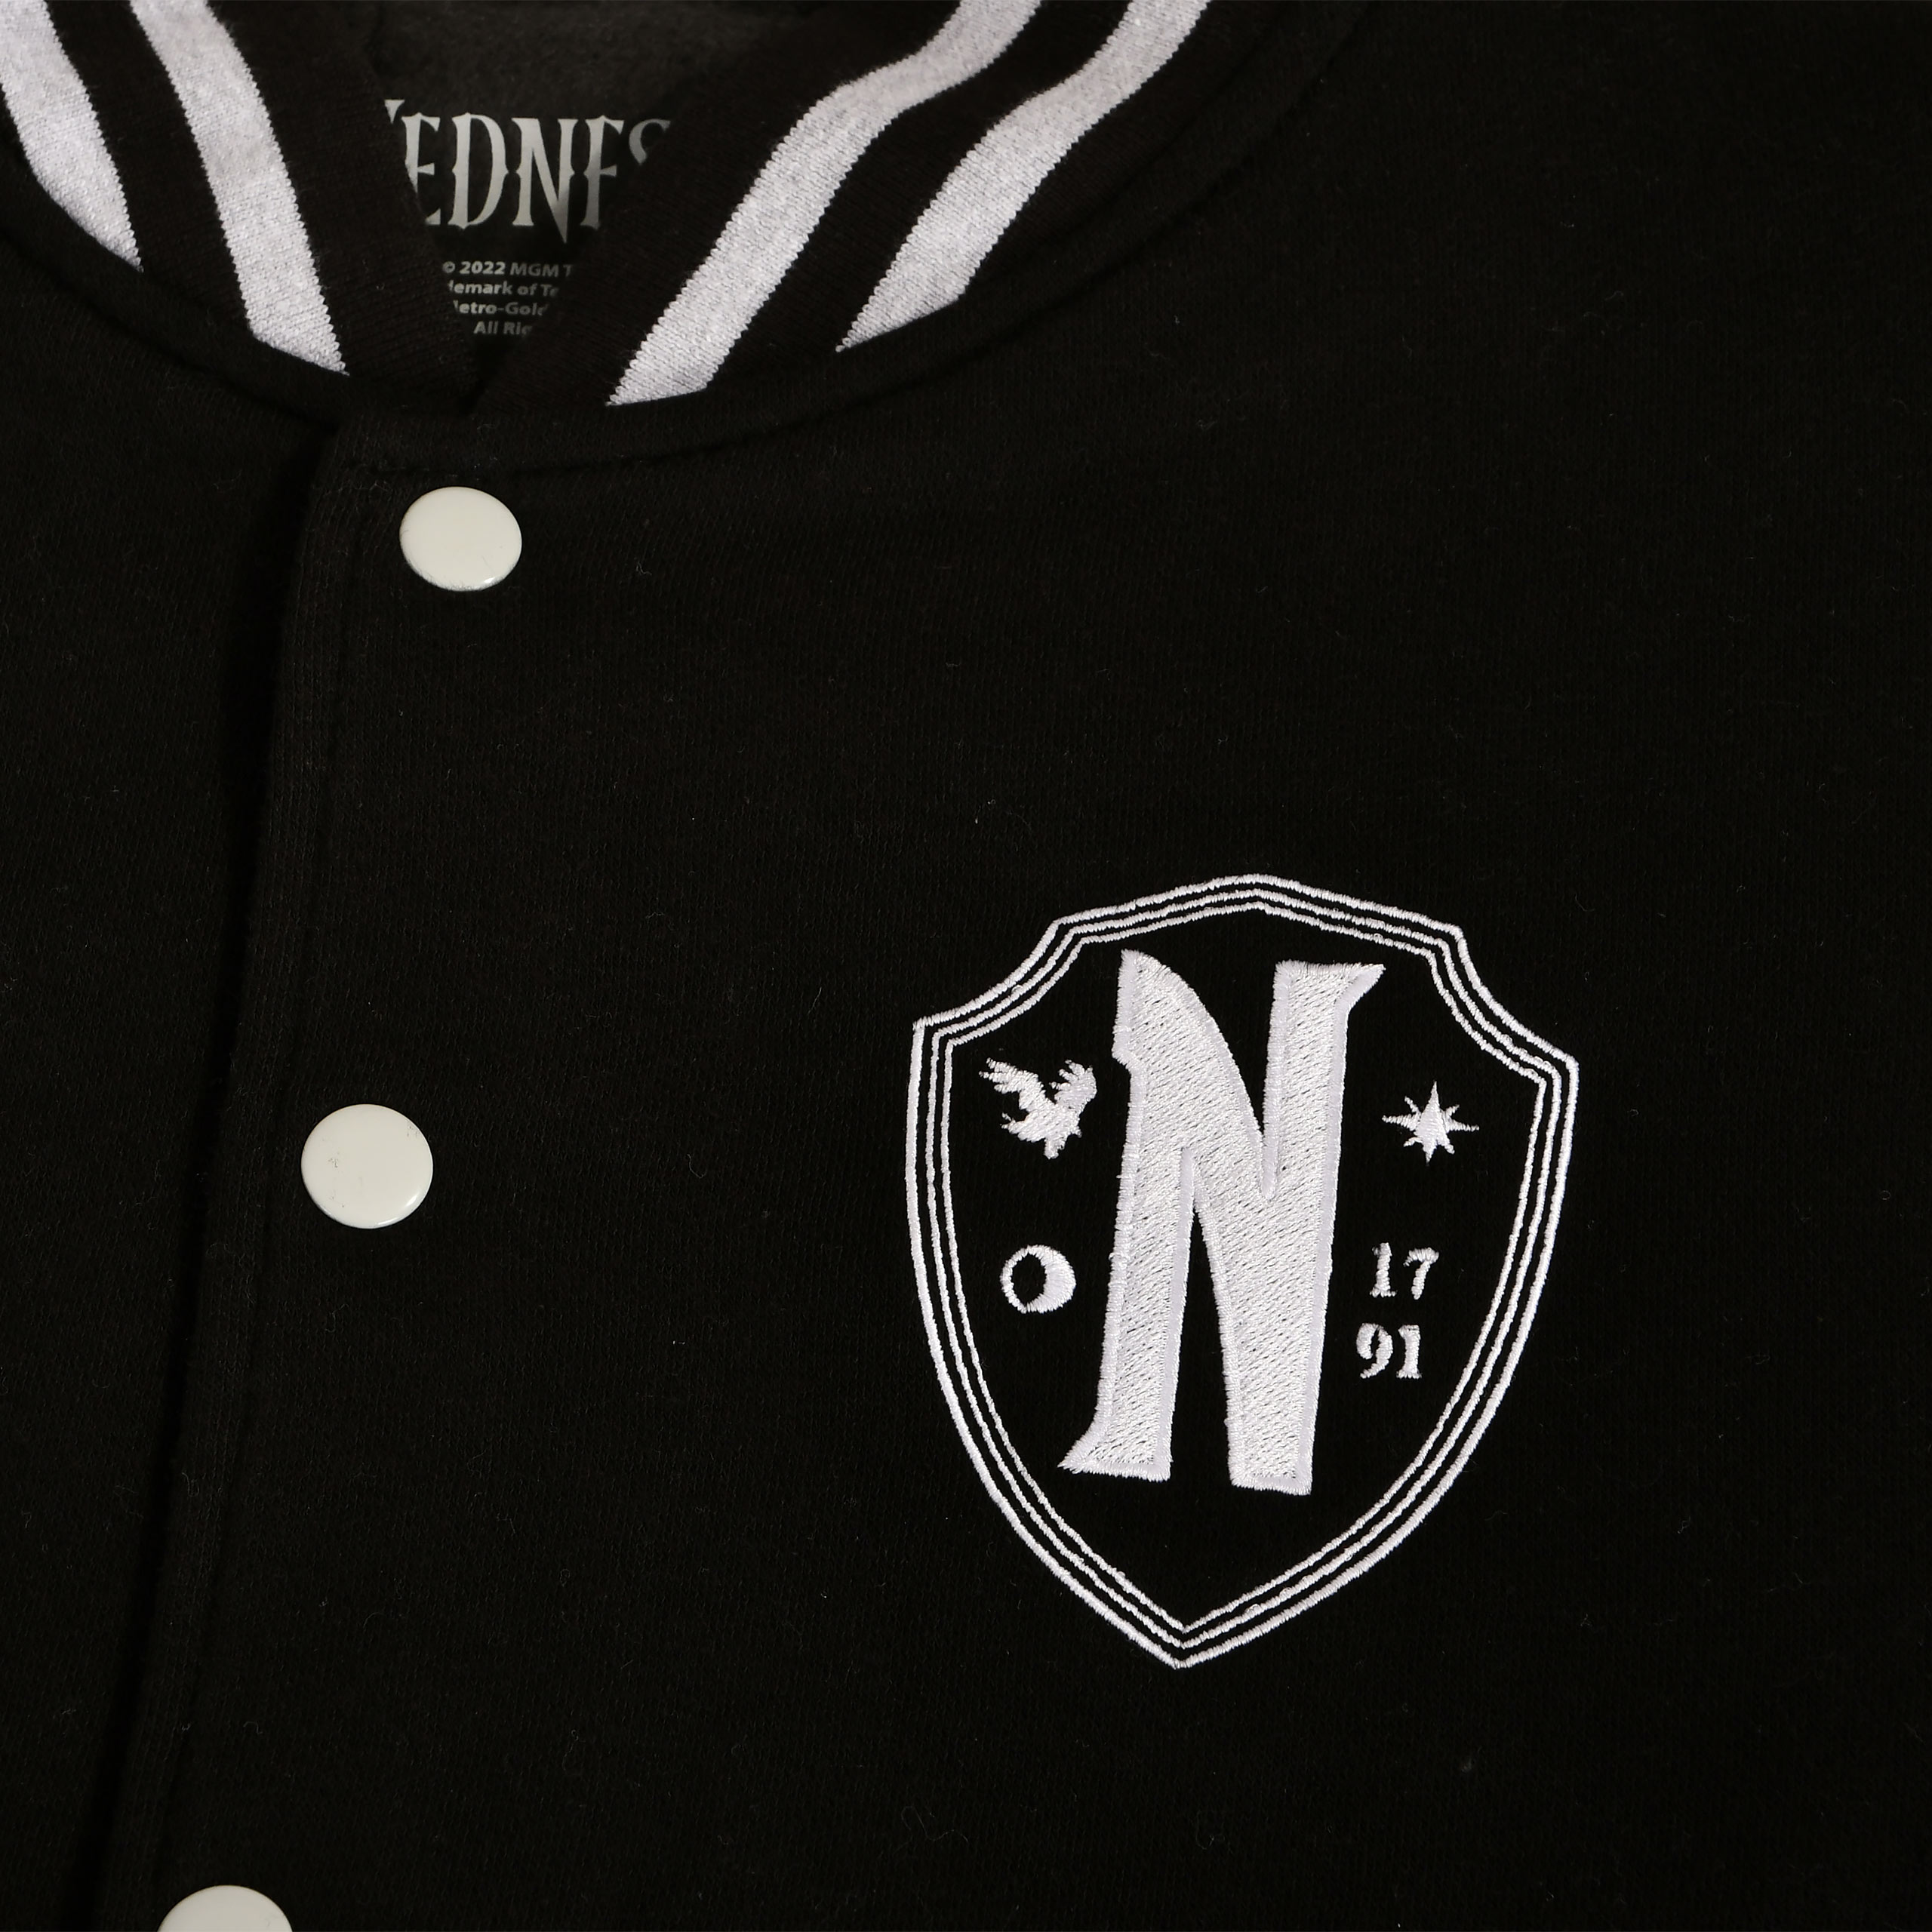 Wednesday - Nevermore Academy College Jacket